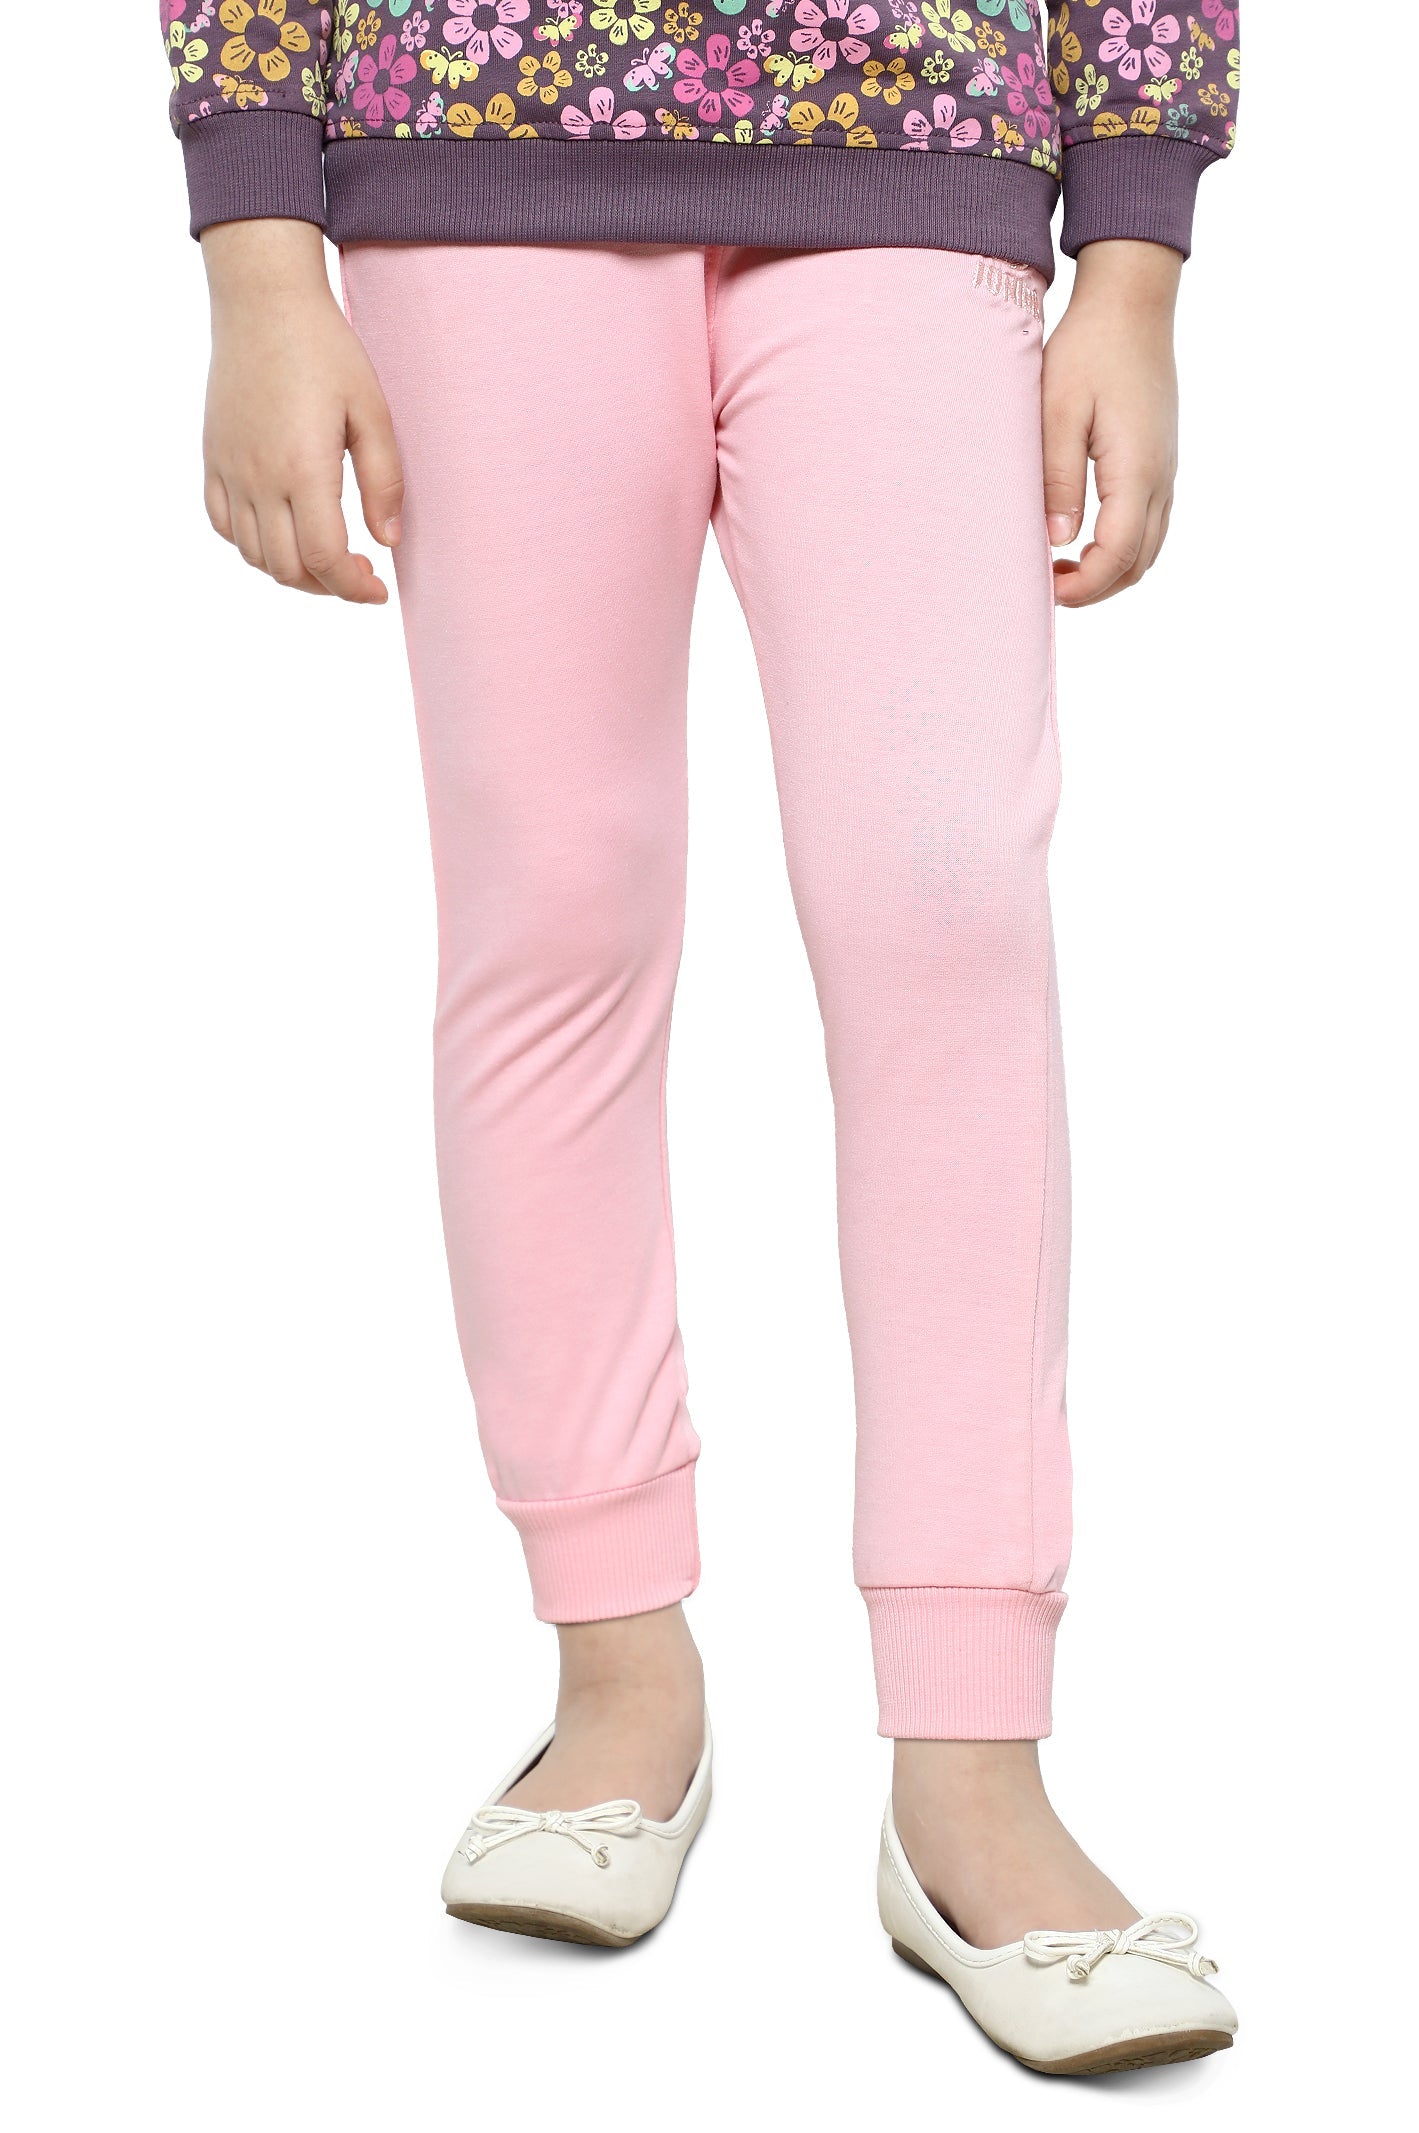 Trouser For Girls SKU: KJP-0004-PINK - Diners